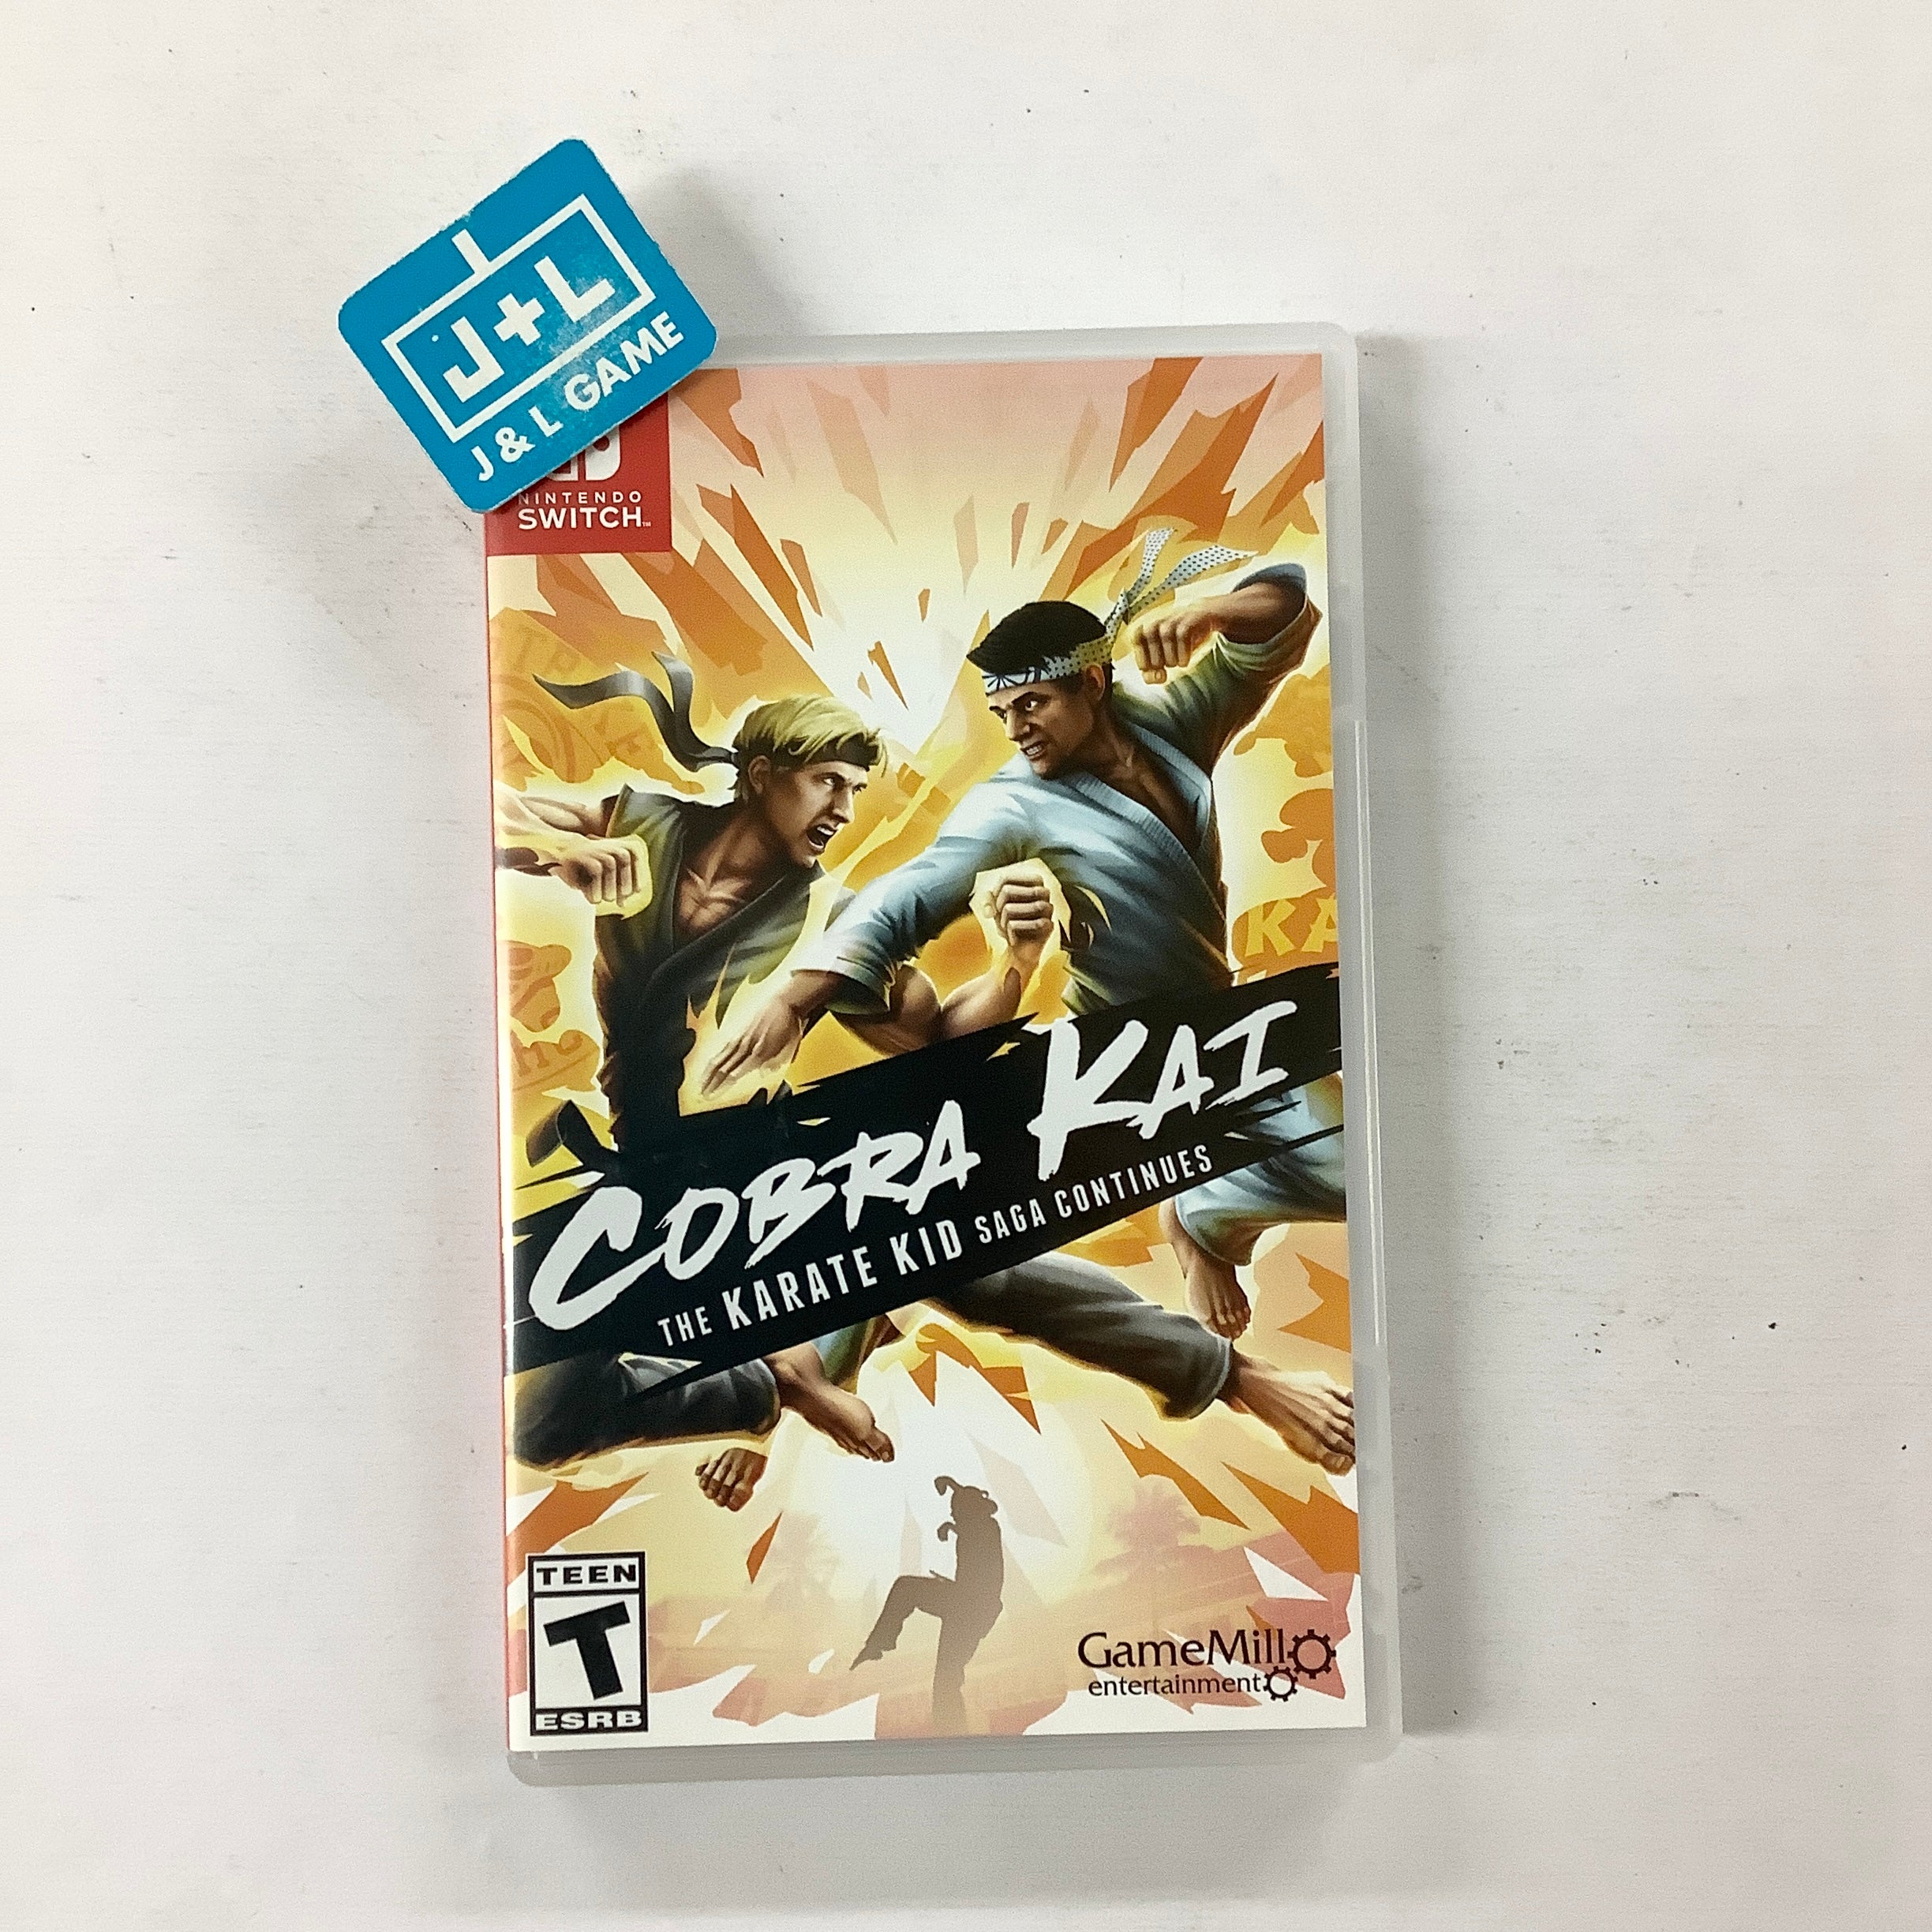 Cobra Kai: The Karate Kid Saga Continues - (NSW) Nintendo Switch [Pre-Owned] Video Games GameMill Entertainment   